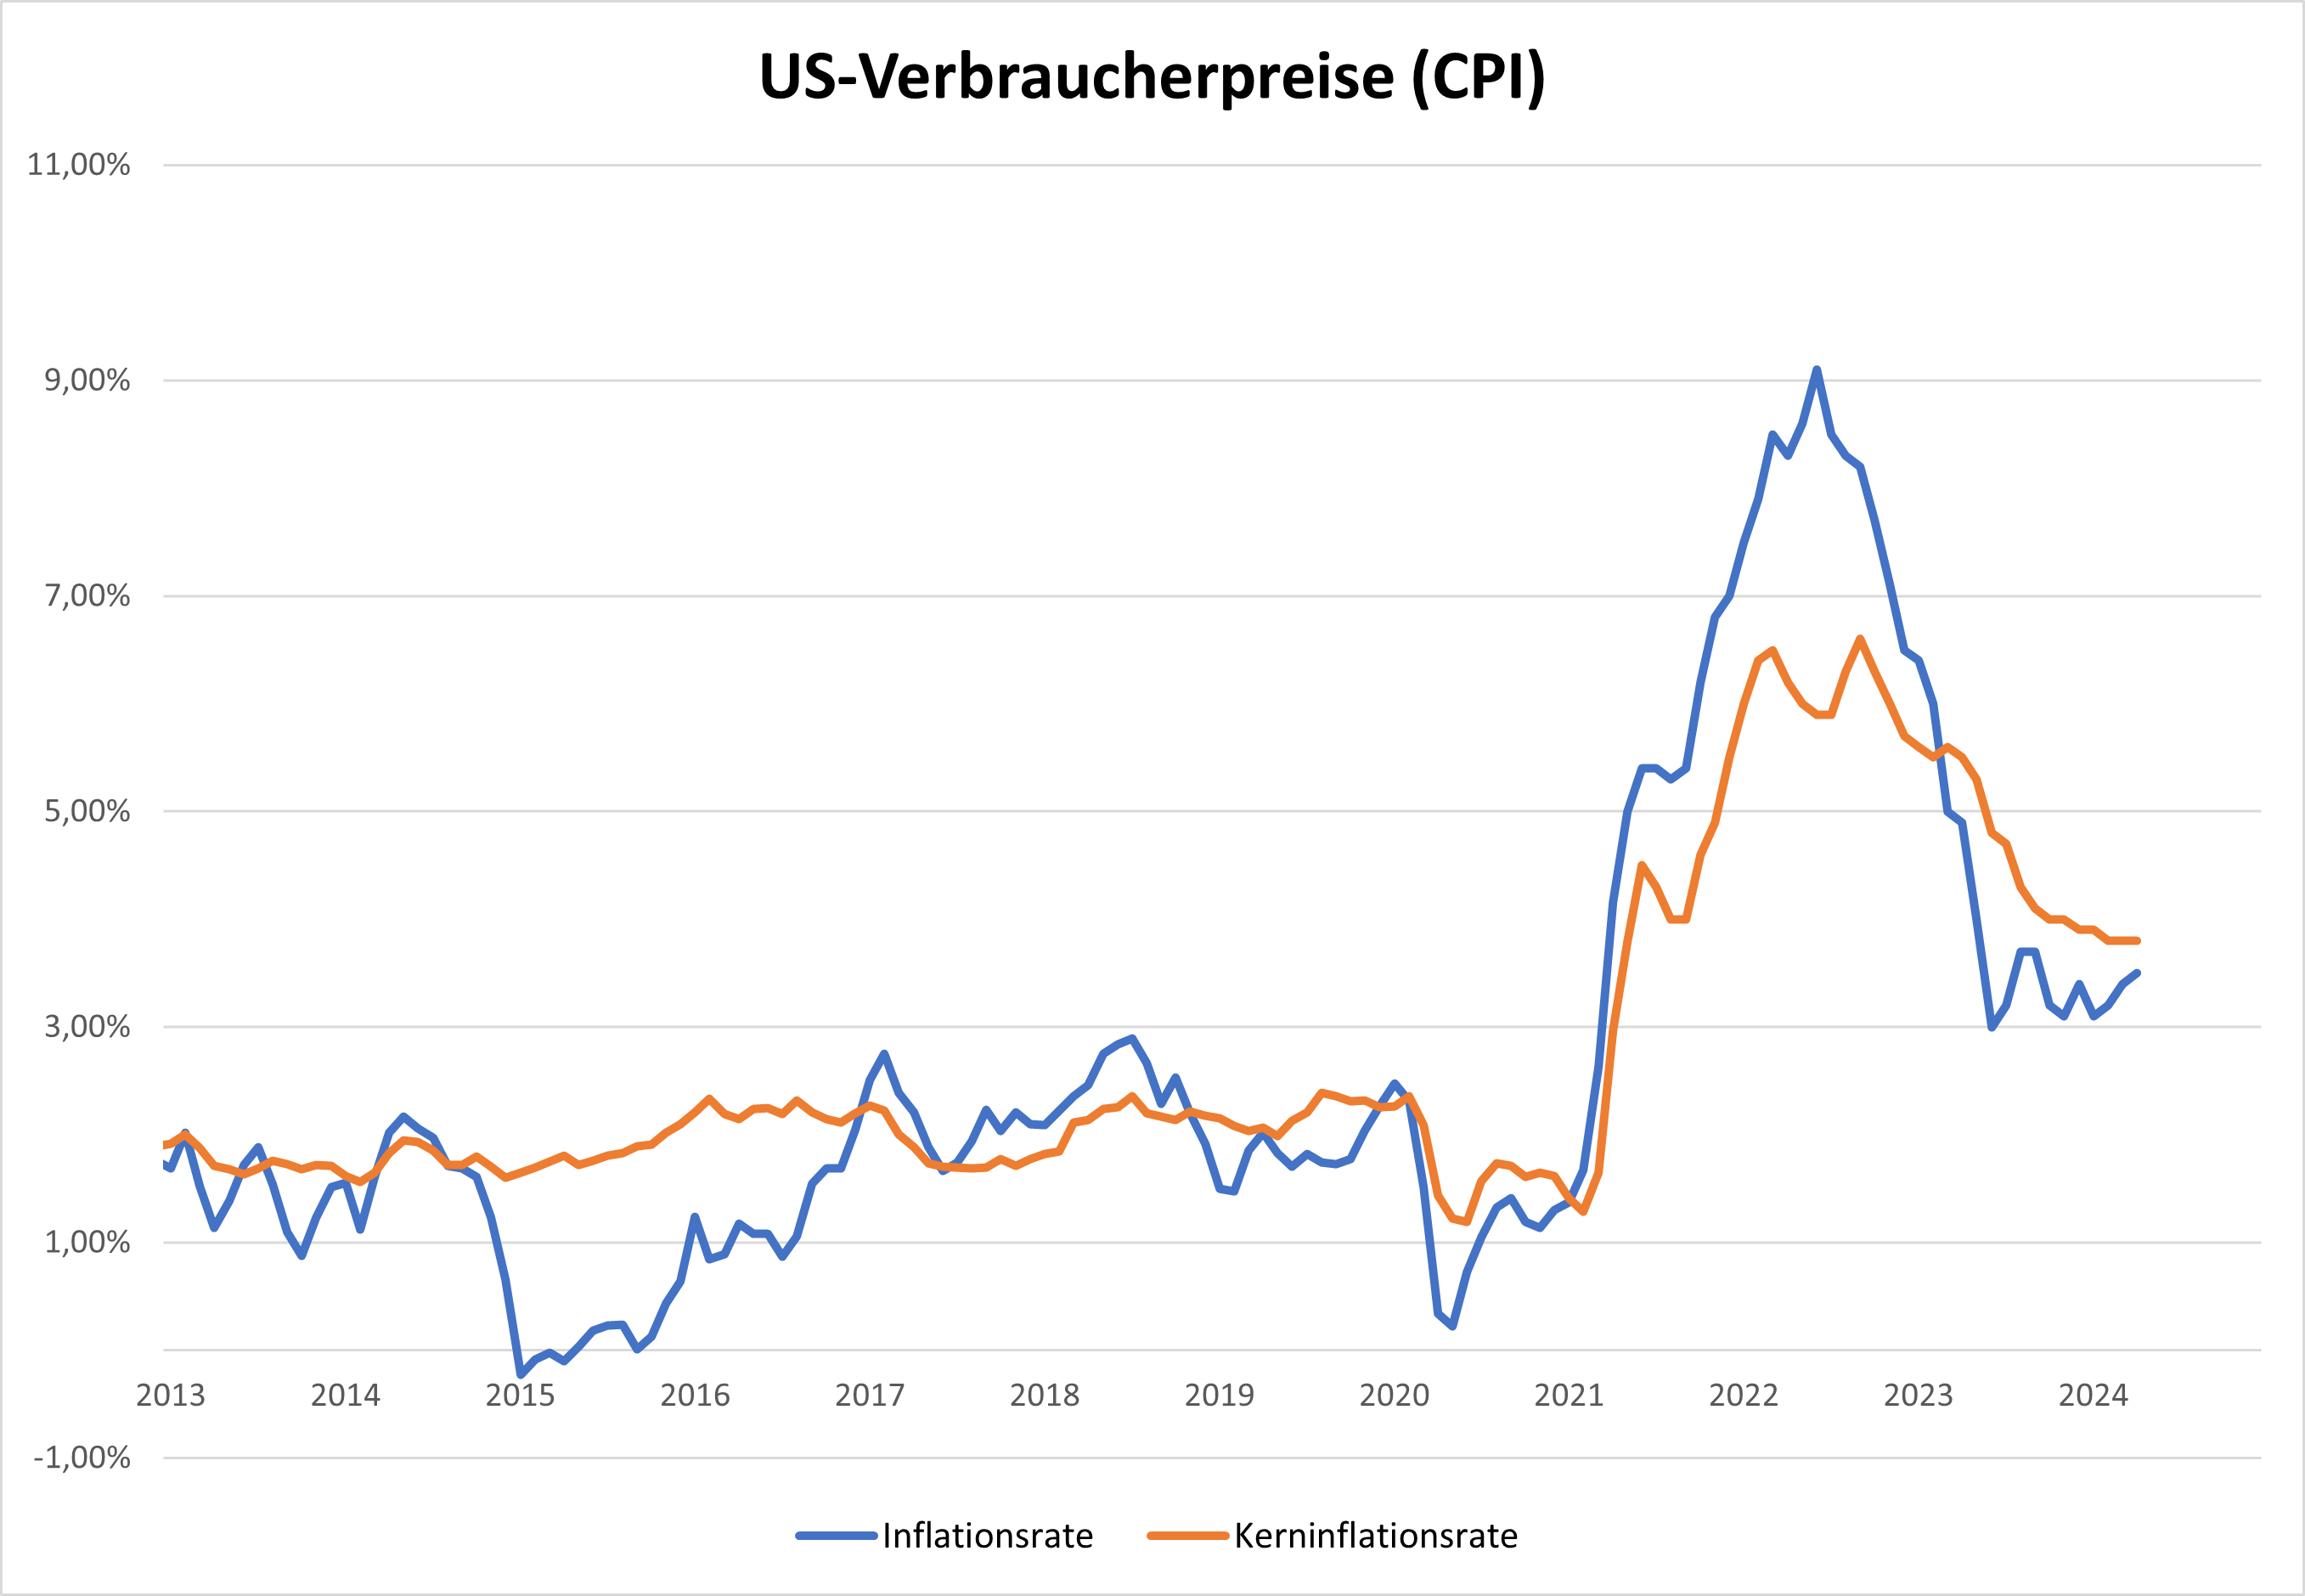 US-Inflation-im-März-höher-als-erwartet-Kommentar-Oliver-Baron-stock3.com-1